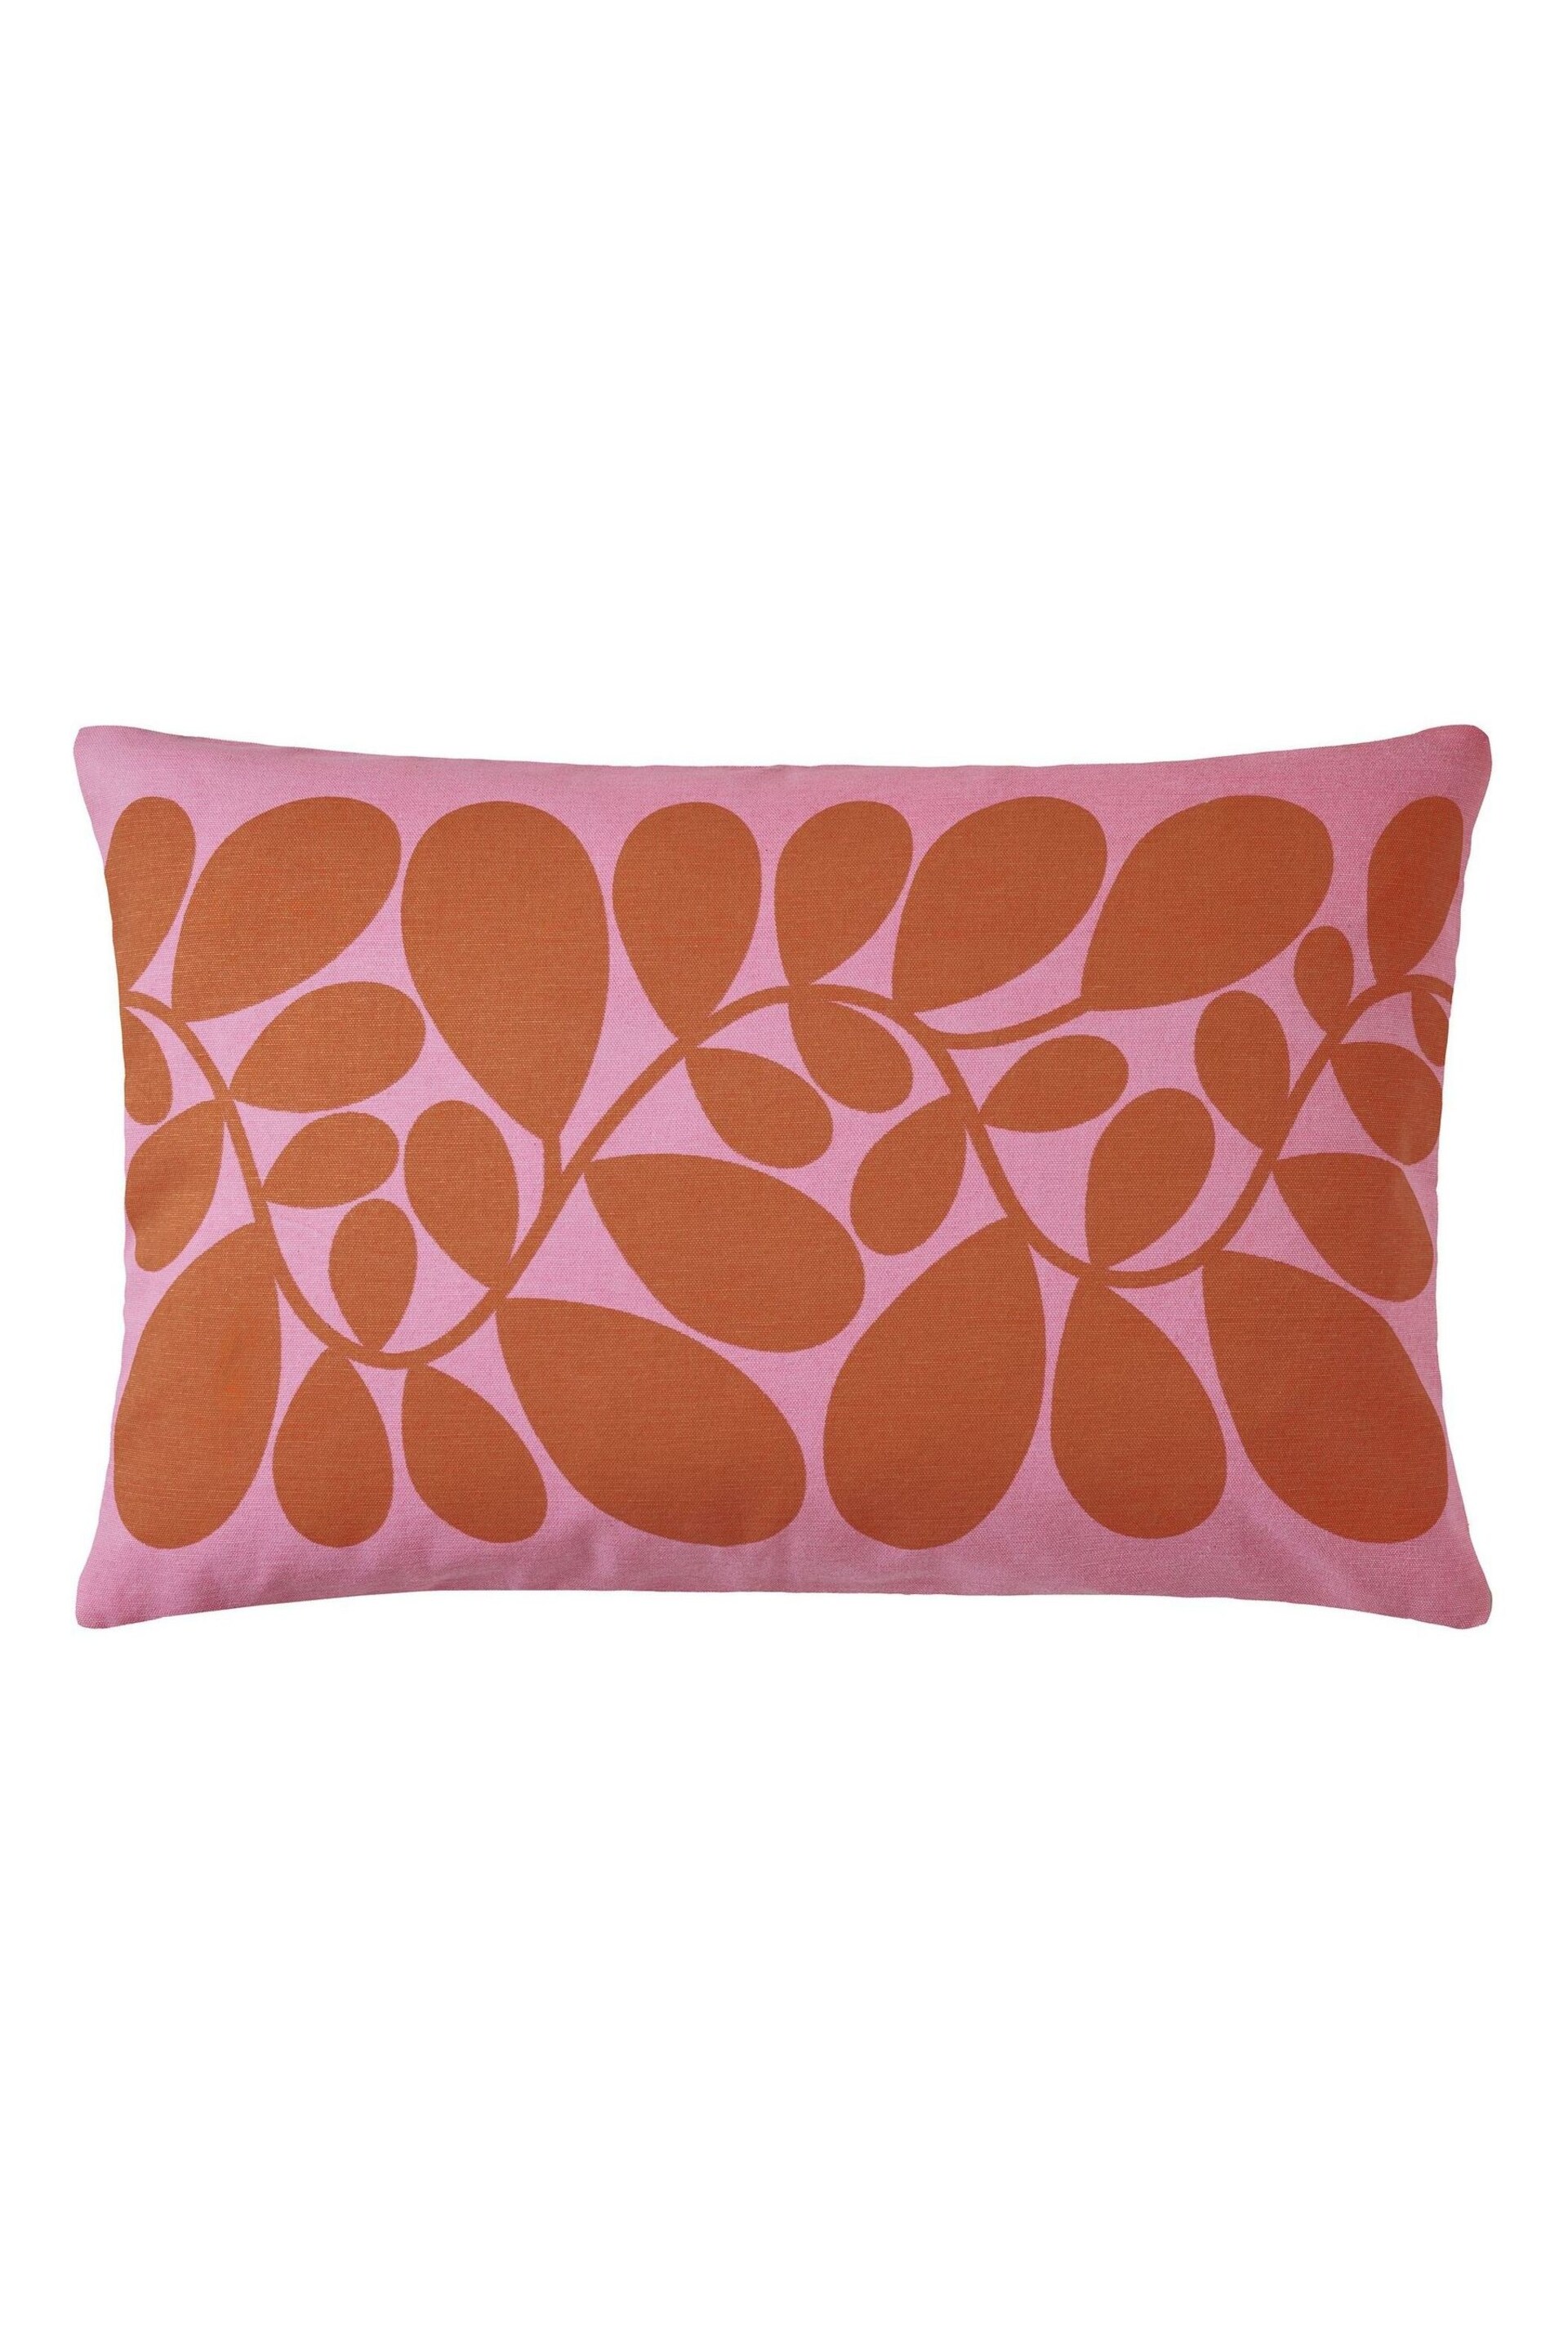 Orla Kiely Tomato Pink Sycarmore Stripe Feather Filled Cushion - Image 4 of 4